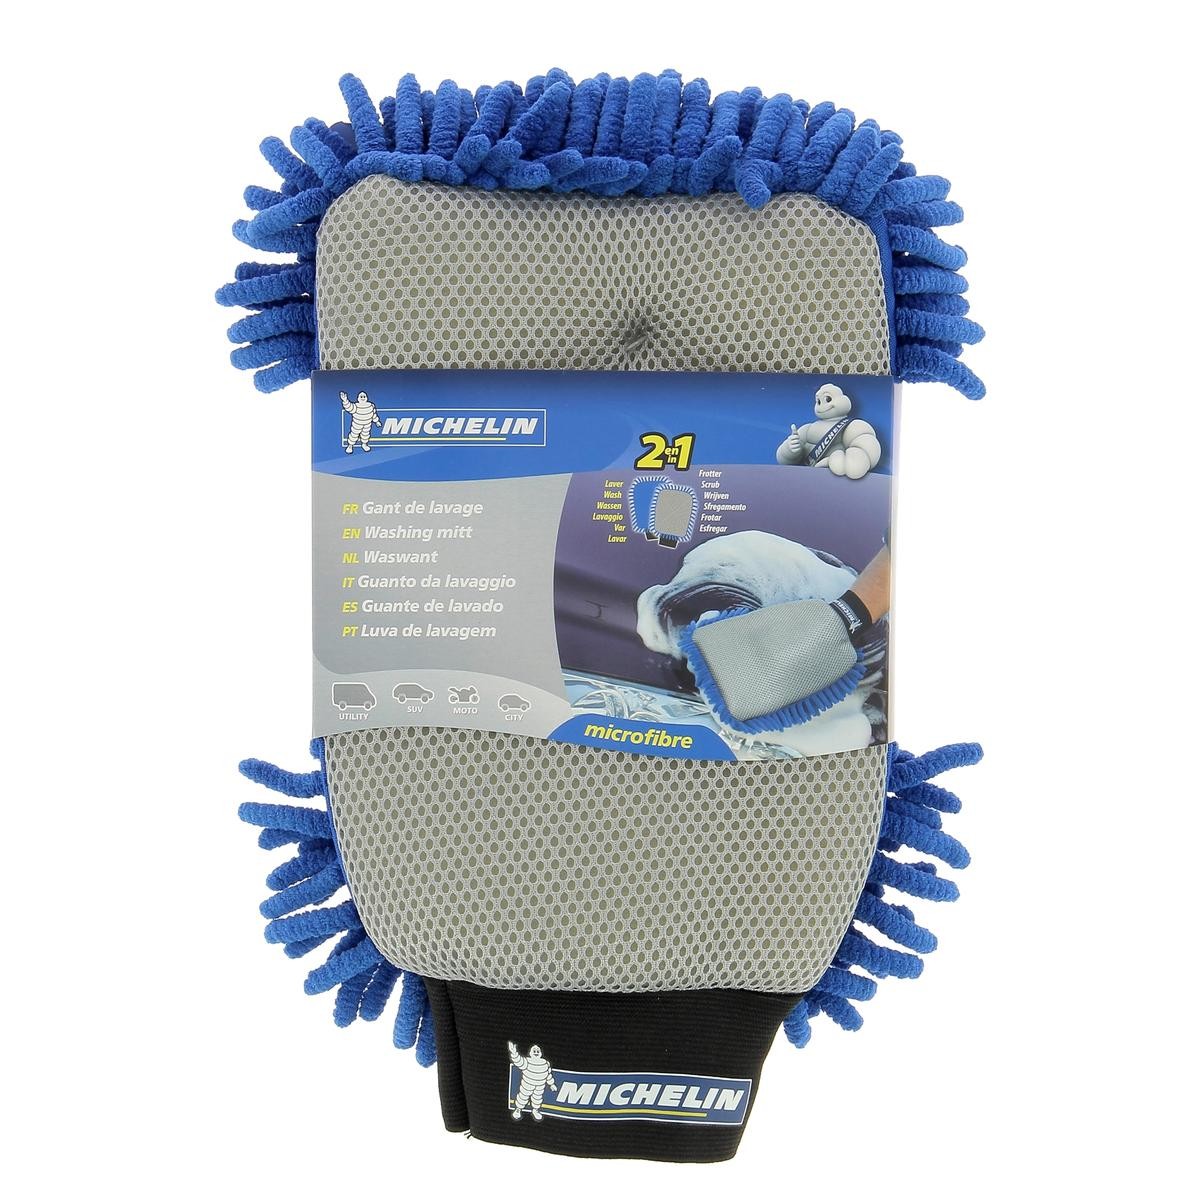 Michelin Biltvätt handske PU (polyuretan) 009482